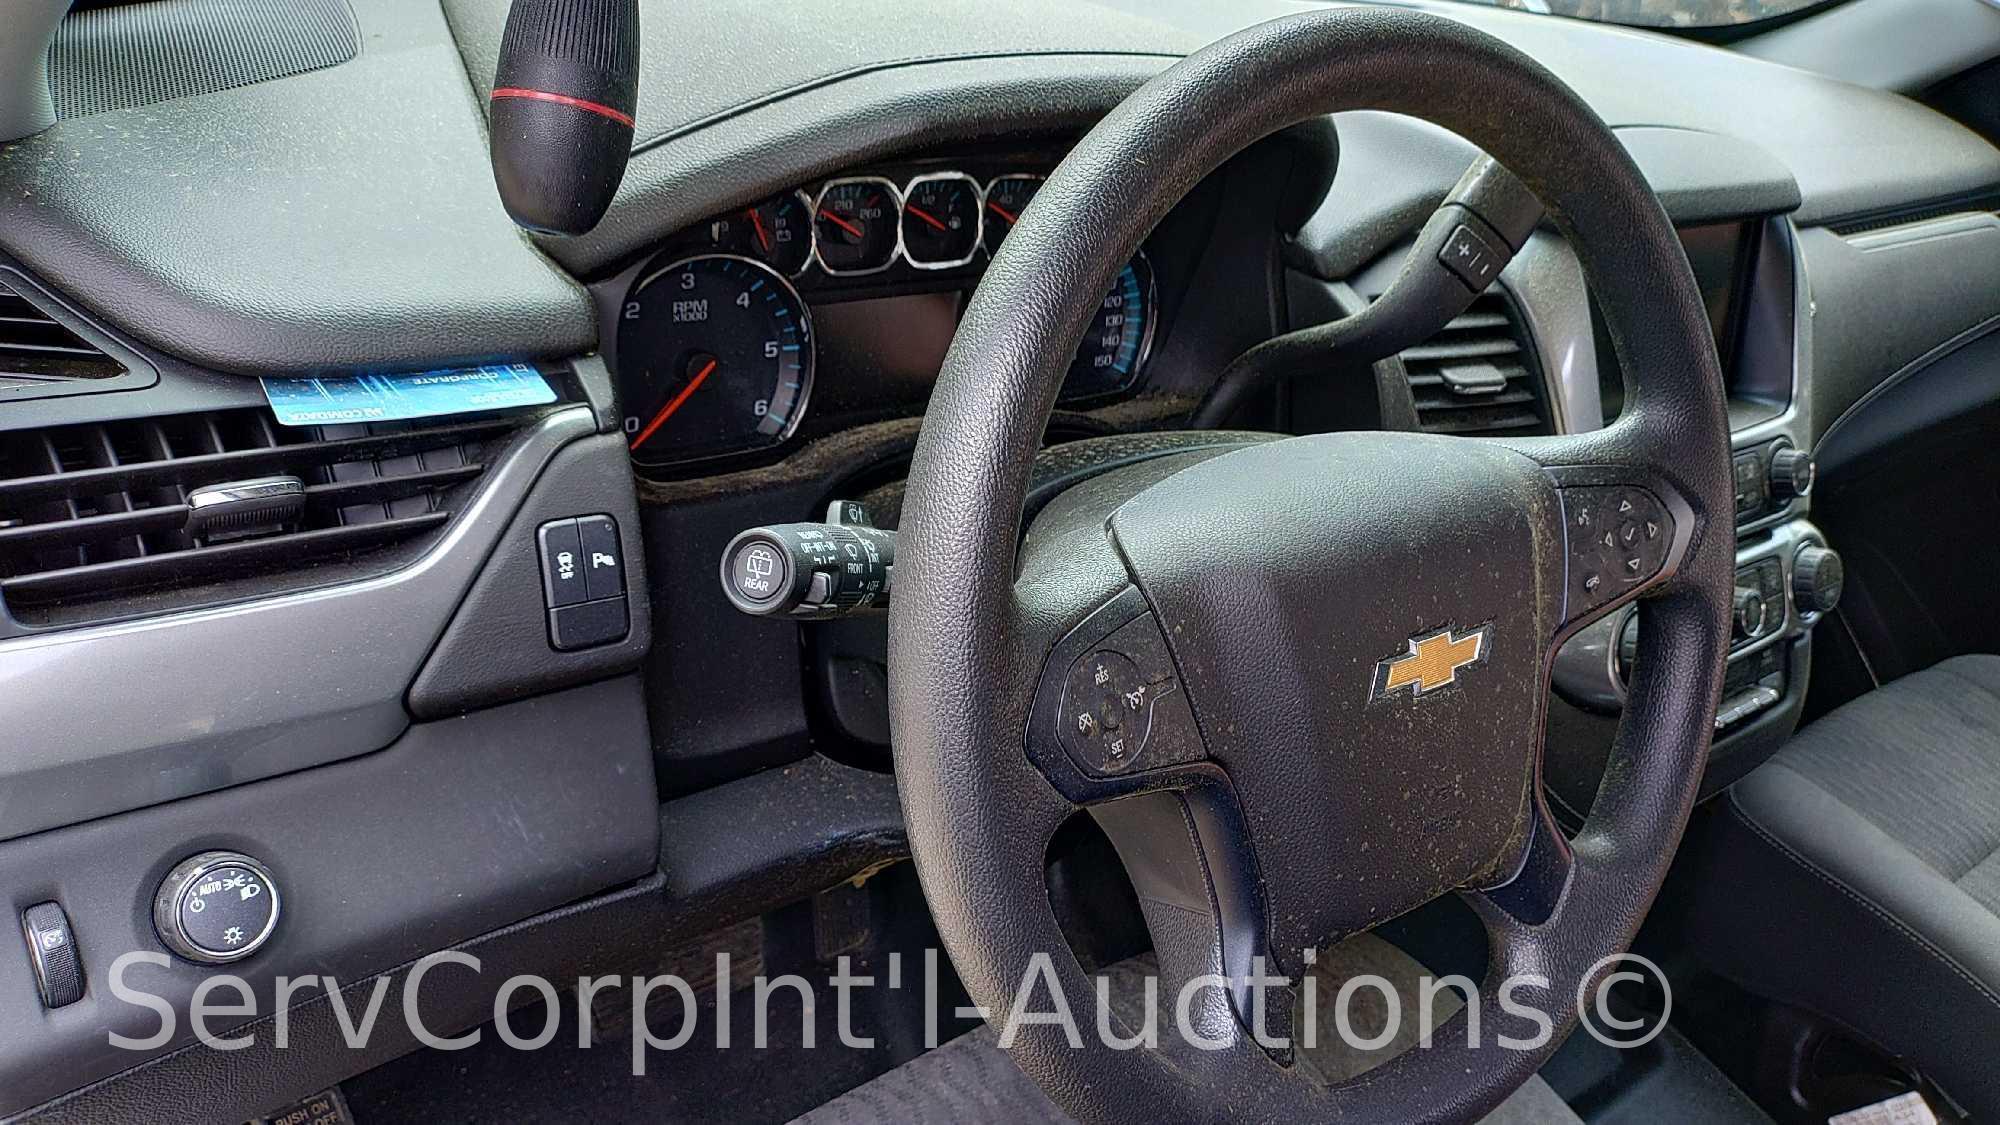 2020 Chevrolet Tahoe Multipurpose Vehicle (MPV), VIN # 1GNLCDEC8LR299355 "PARTS ONLY"